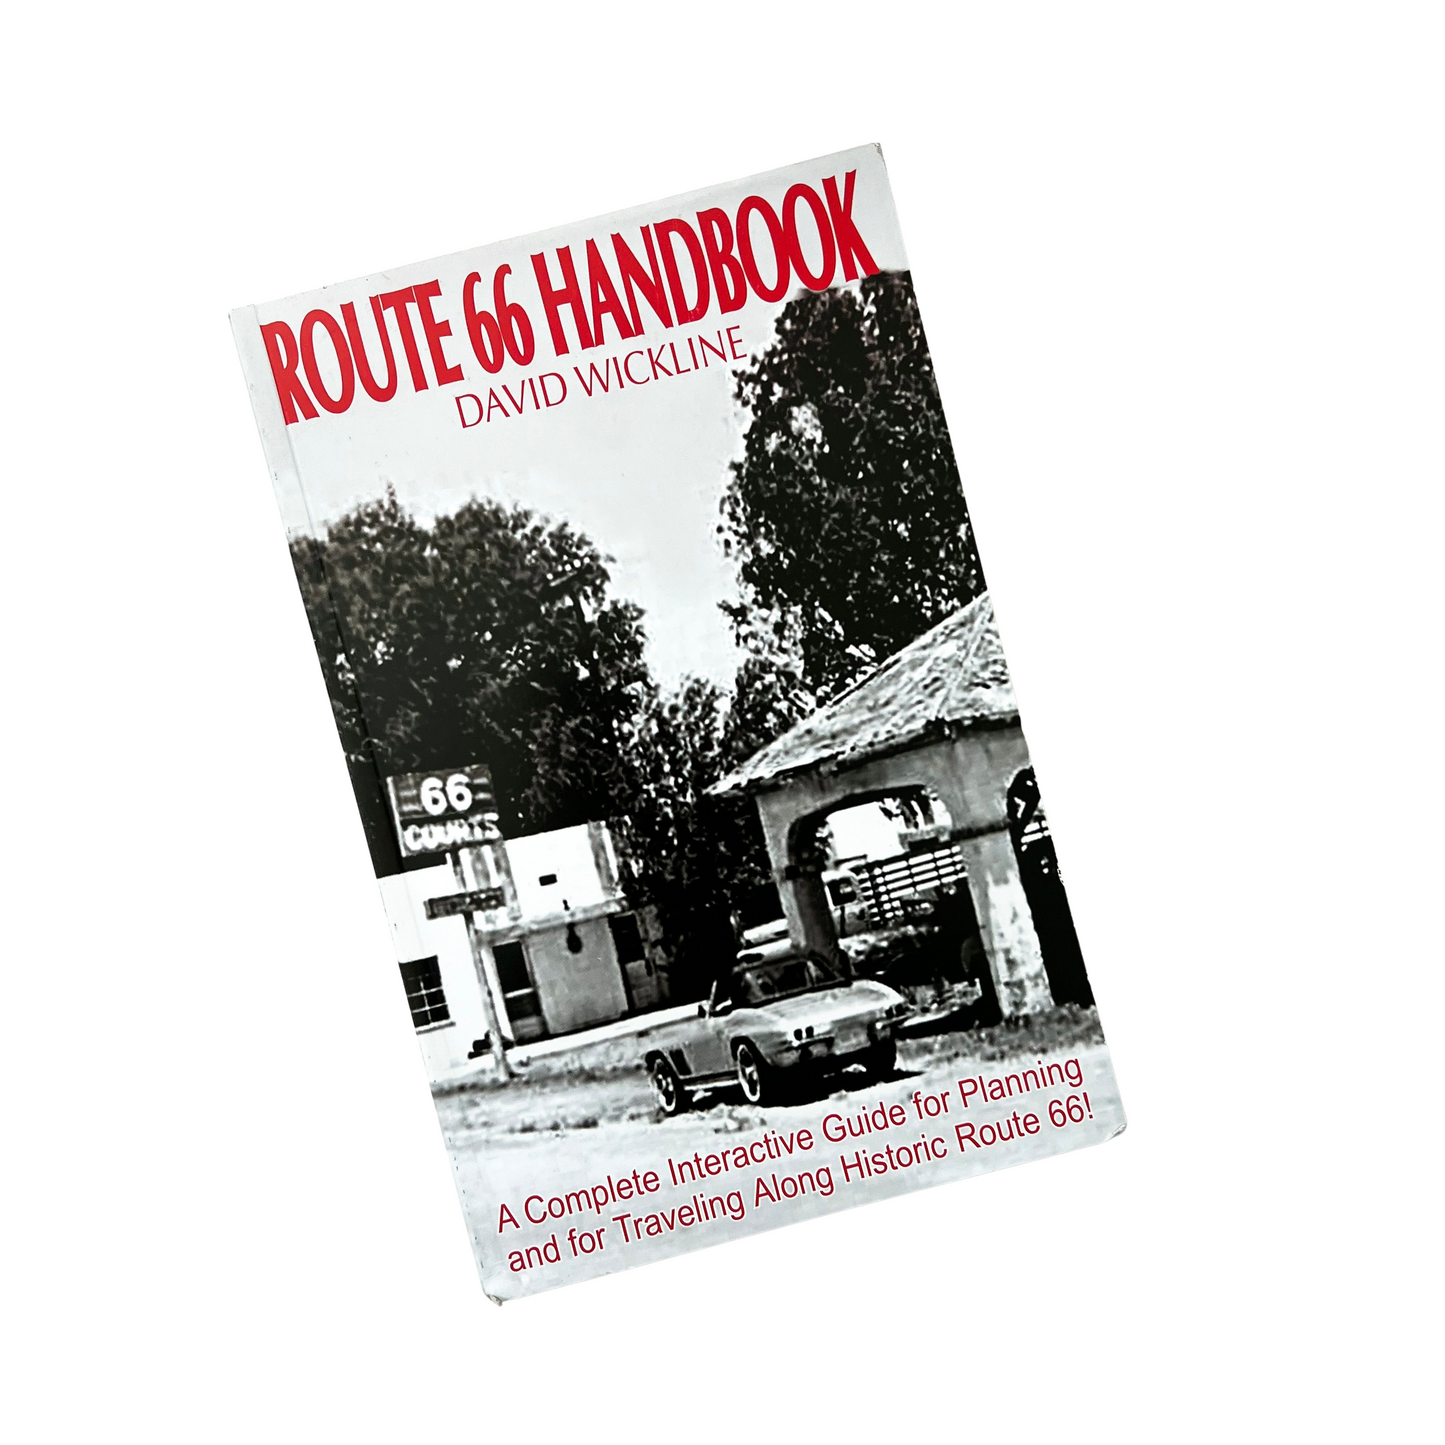 Route 66 Handbook by David Wickline